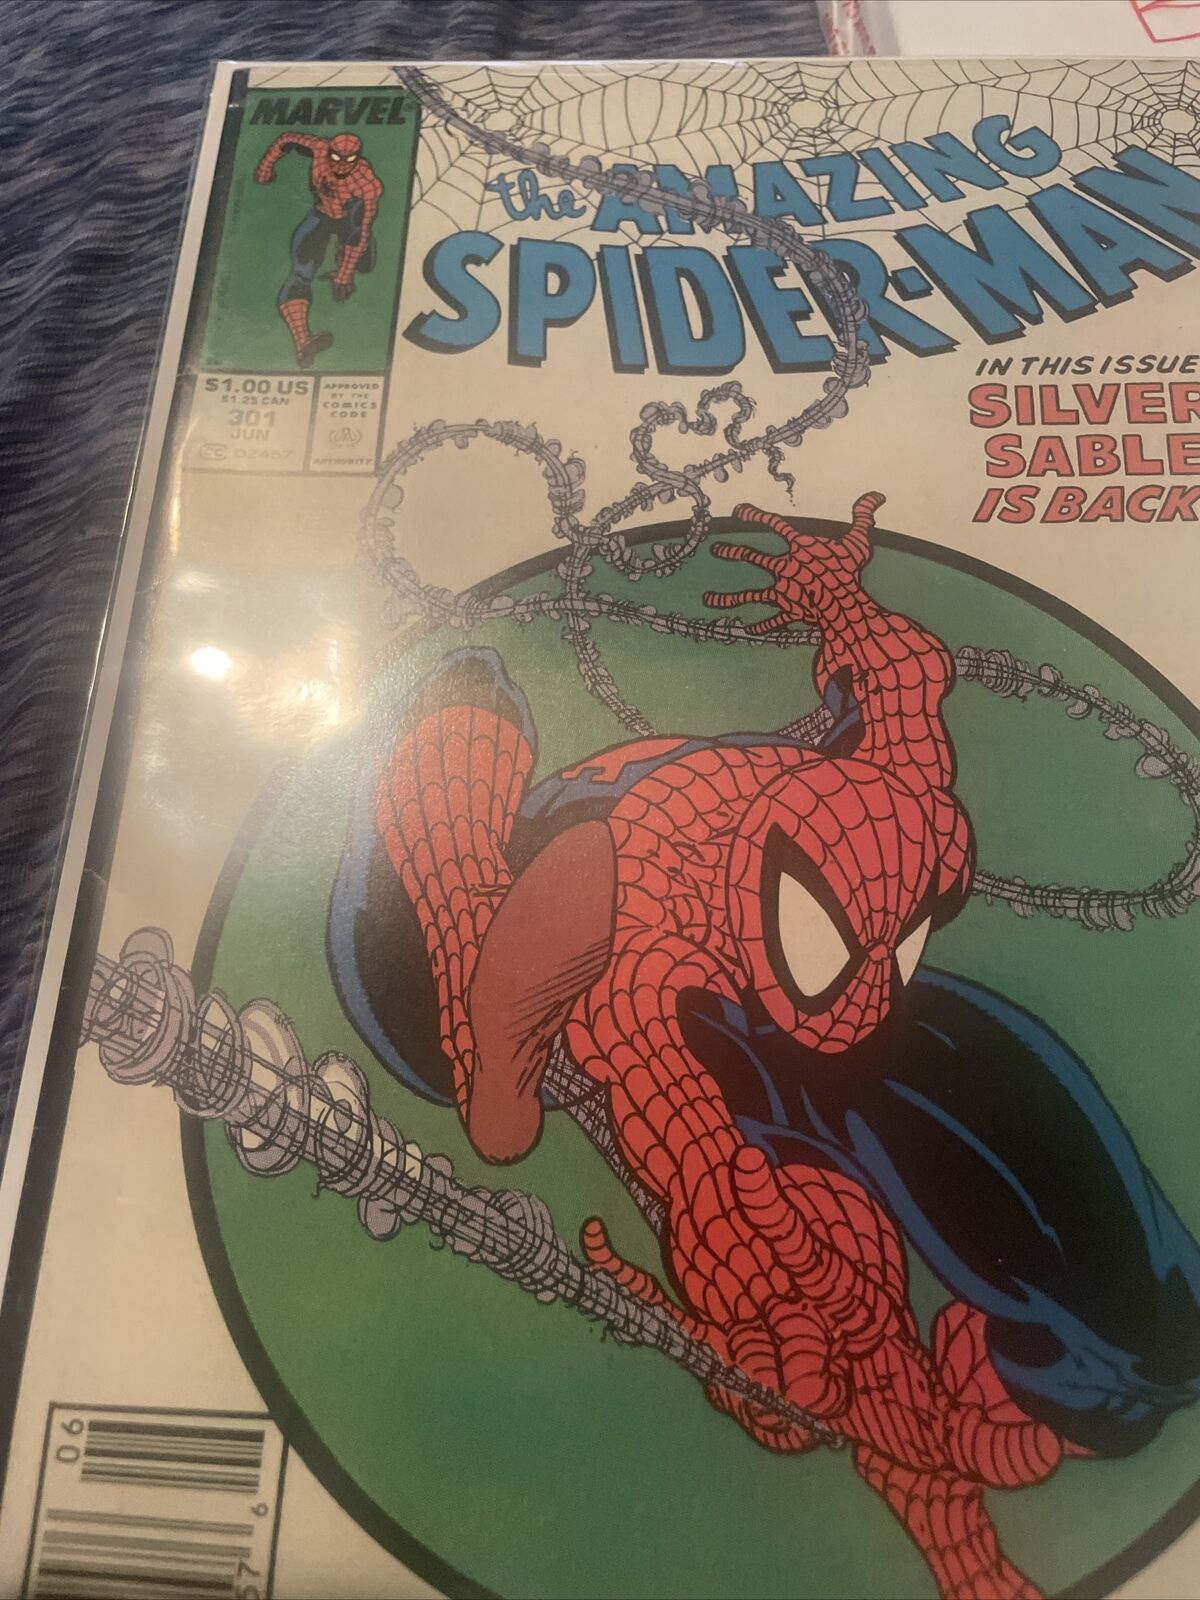 The Amazing Spider-Man #301 (Marvel Comics June 1988)